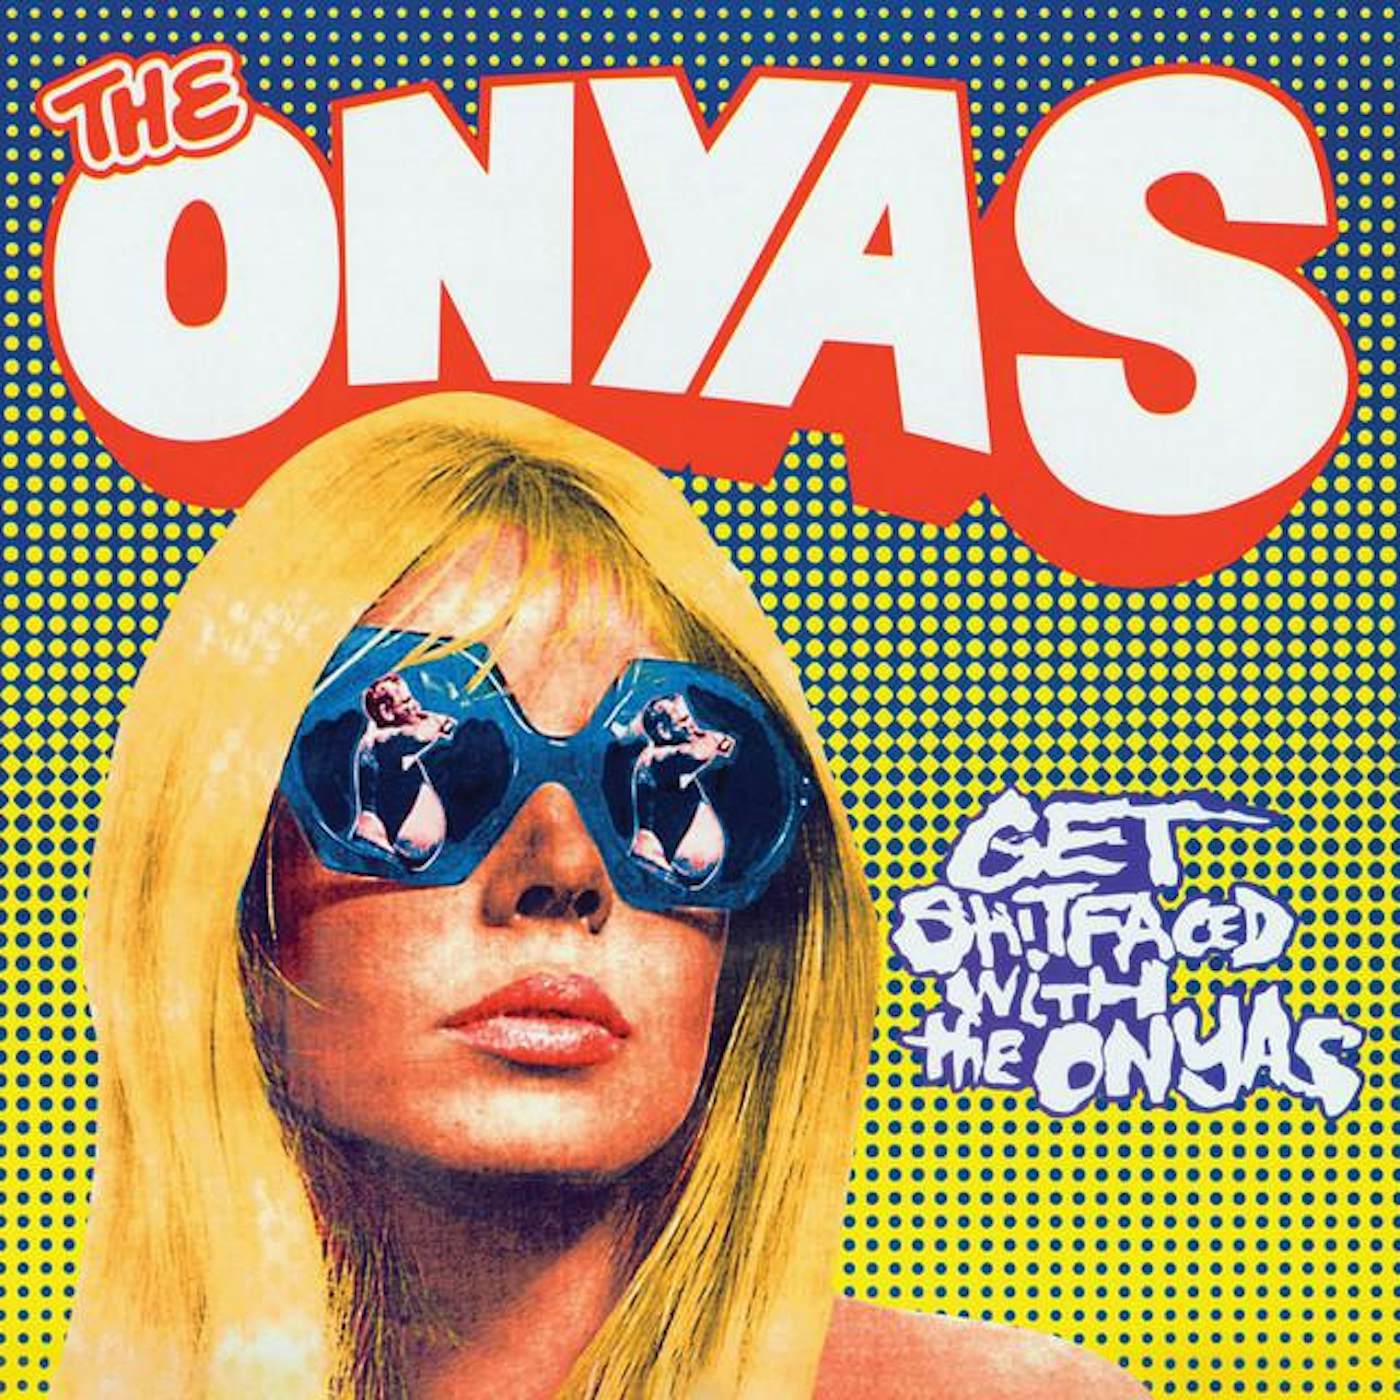 The Onyas